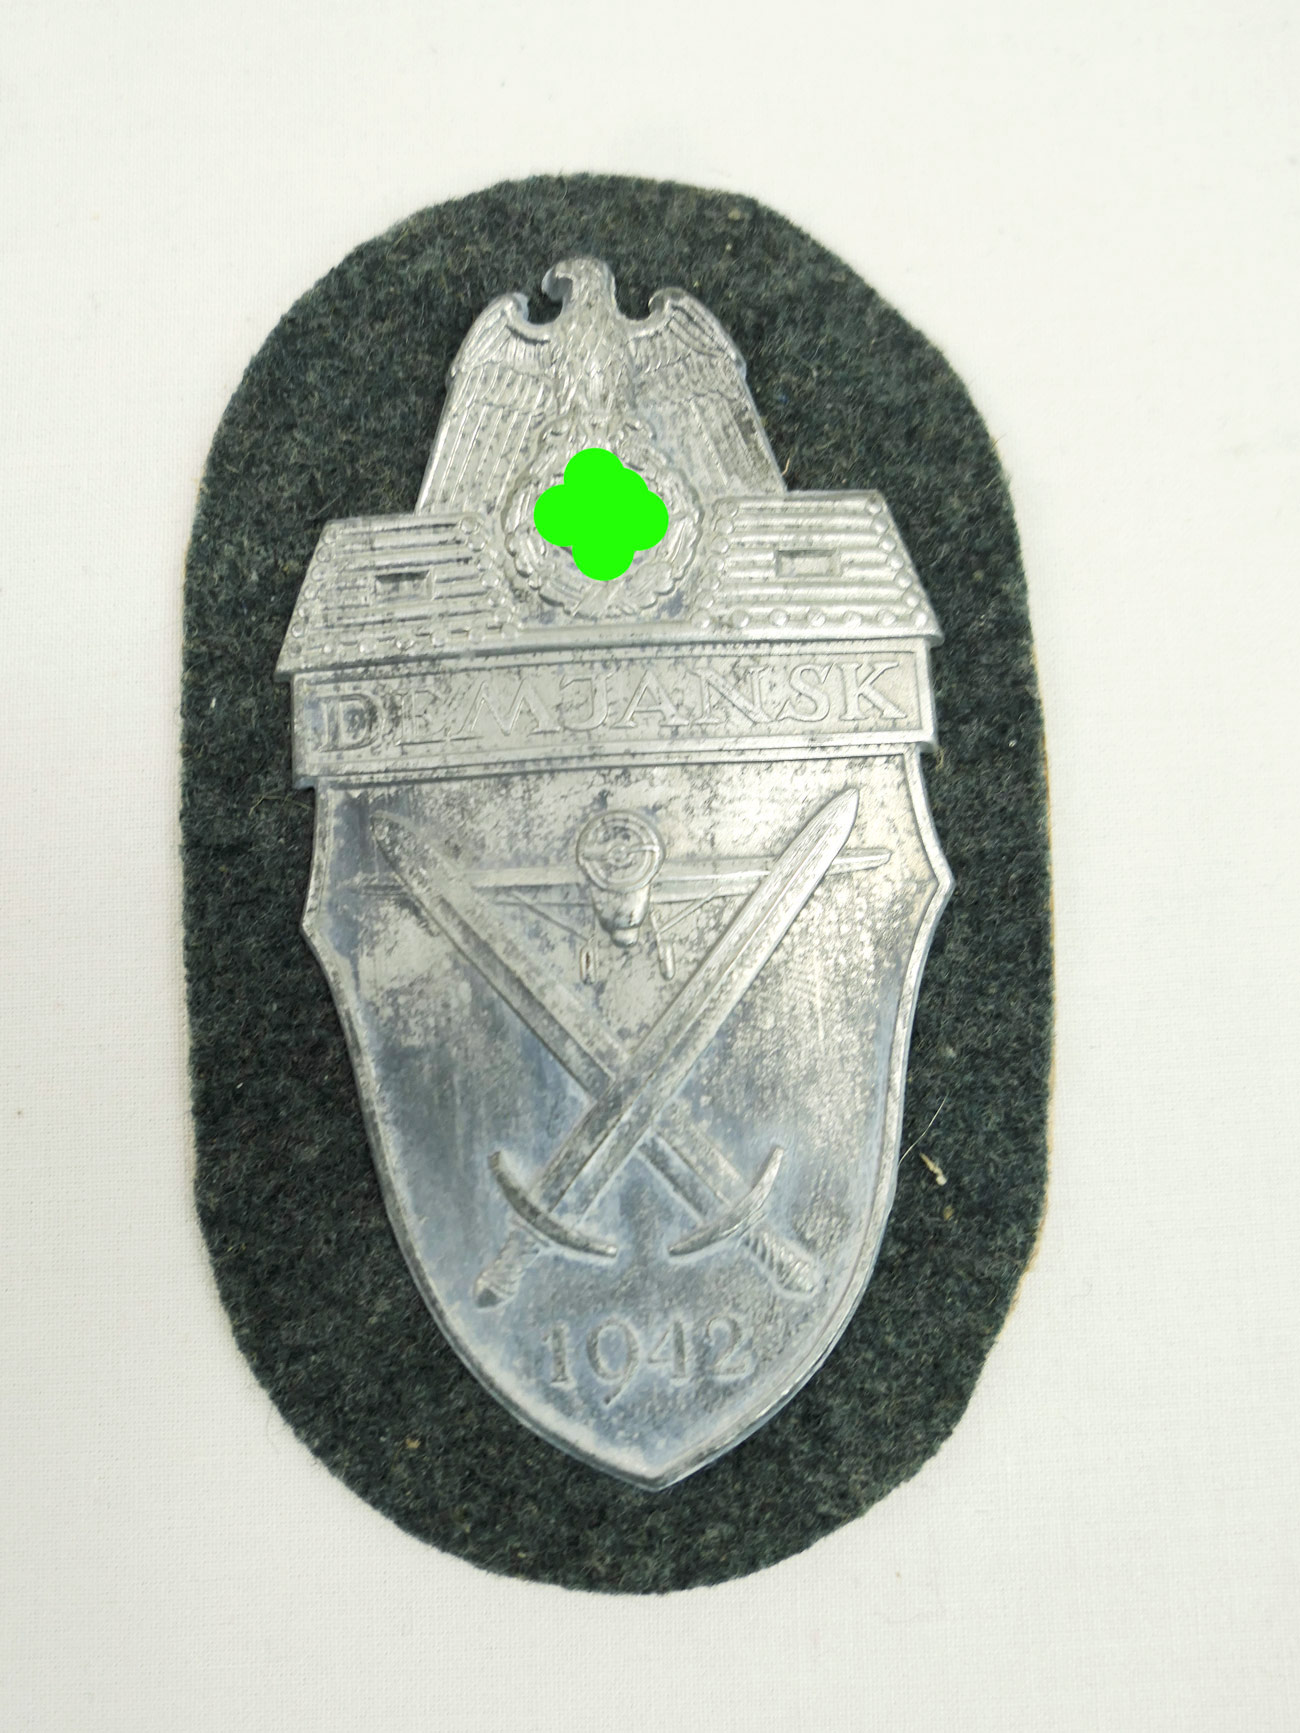 Demjansk 1942 Military Militaria l Anstecker l Abzeichen l Pin 216 